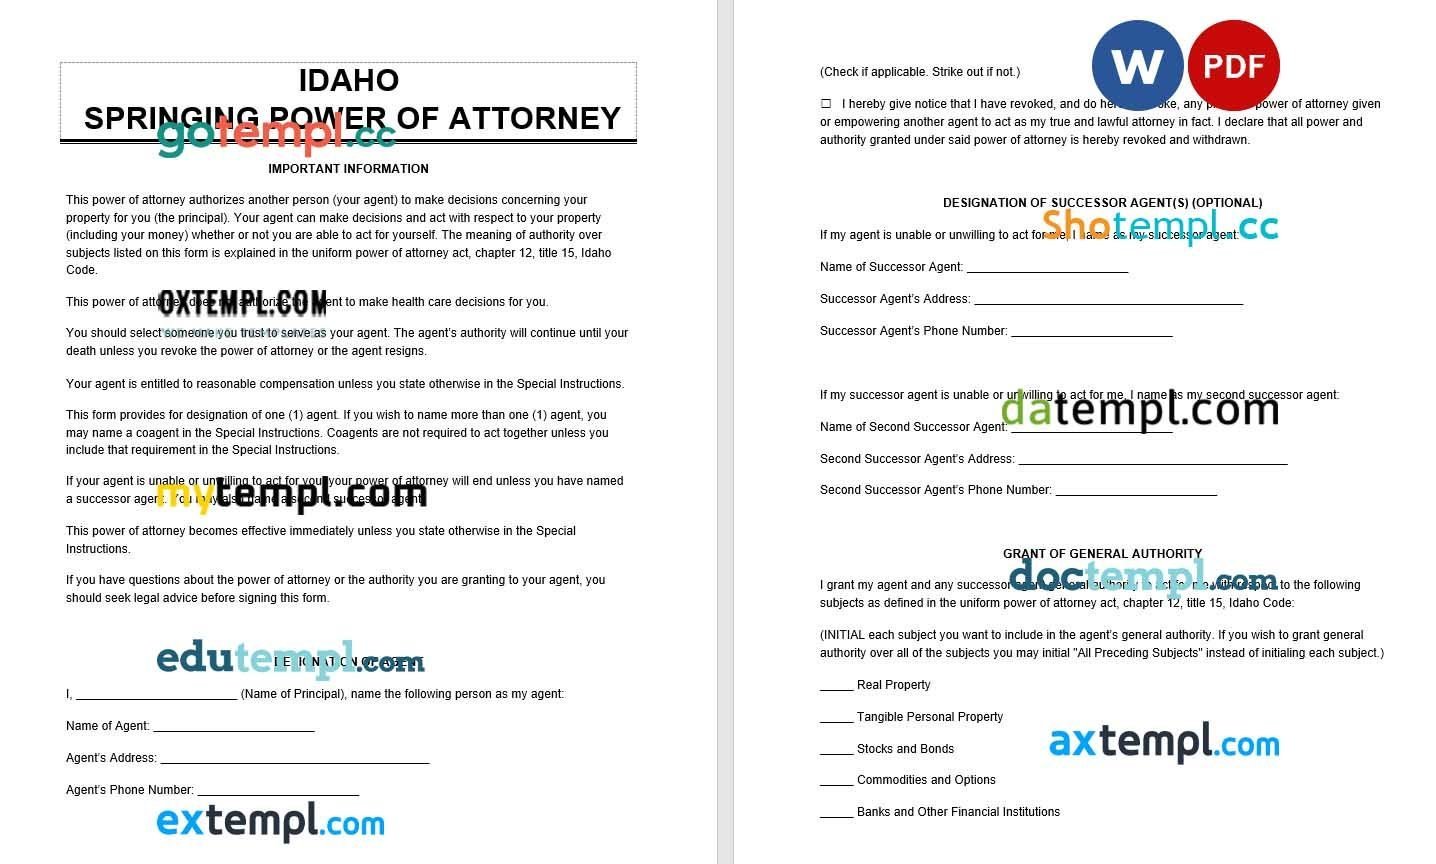 Idaho Springing Power of Attorney example, fully editable